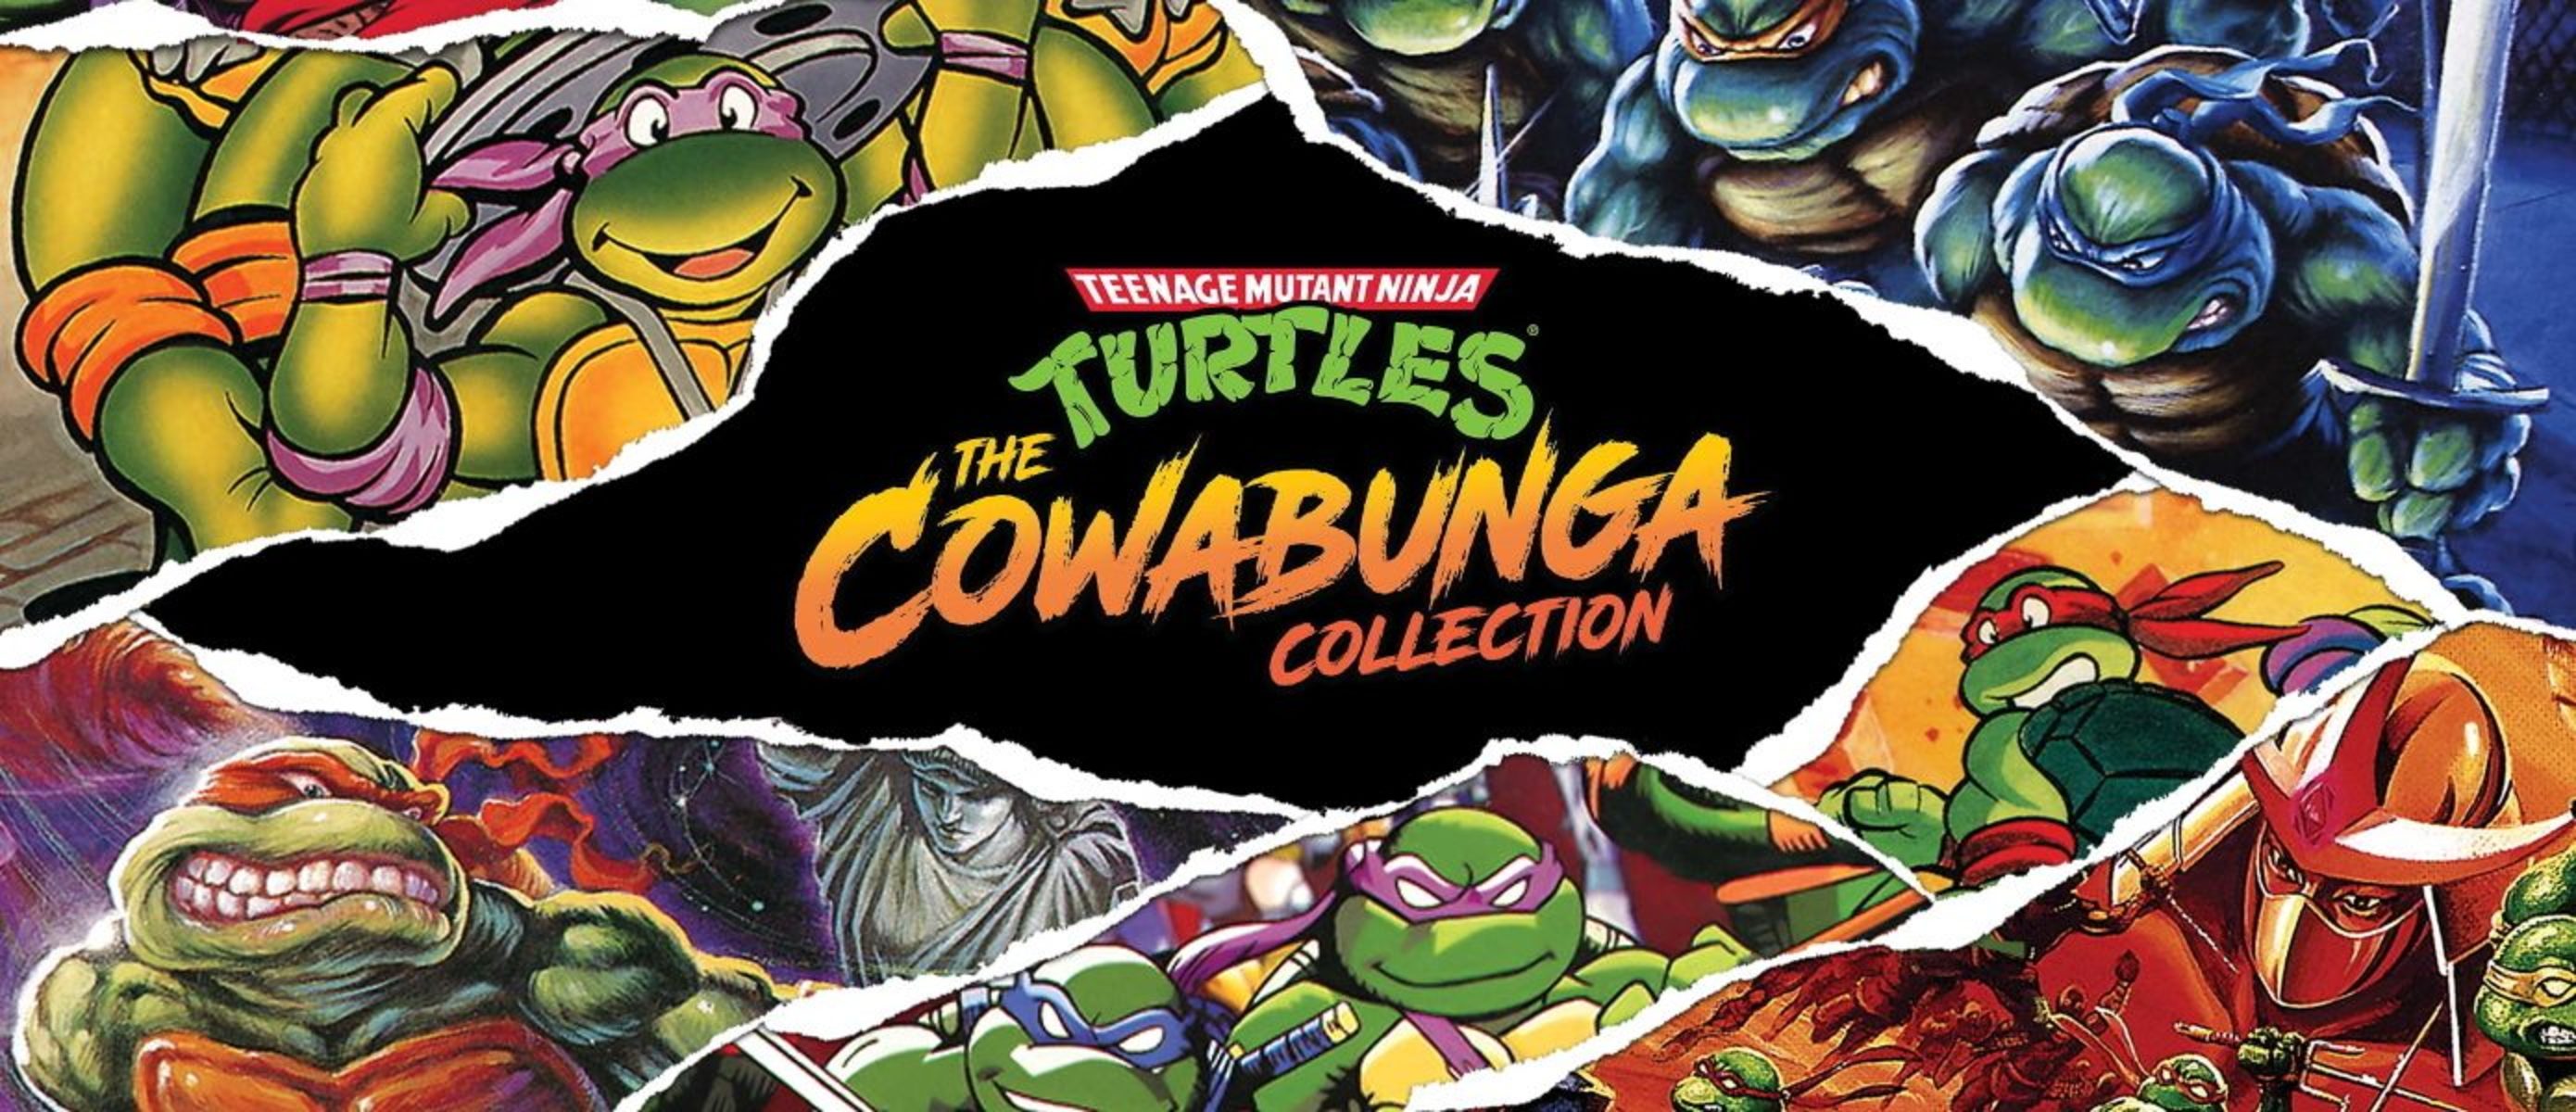 Teenage mutant ninja turtles the cowabunga collection купить steam фото 106